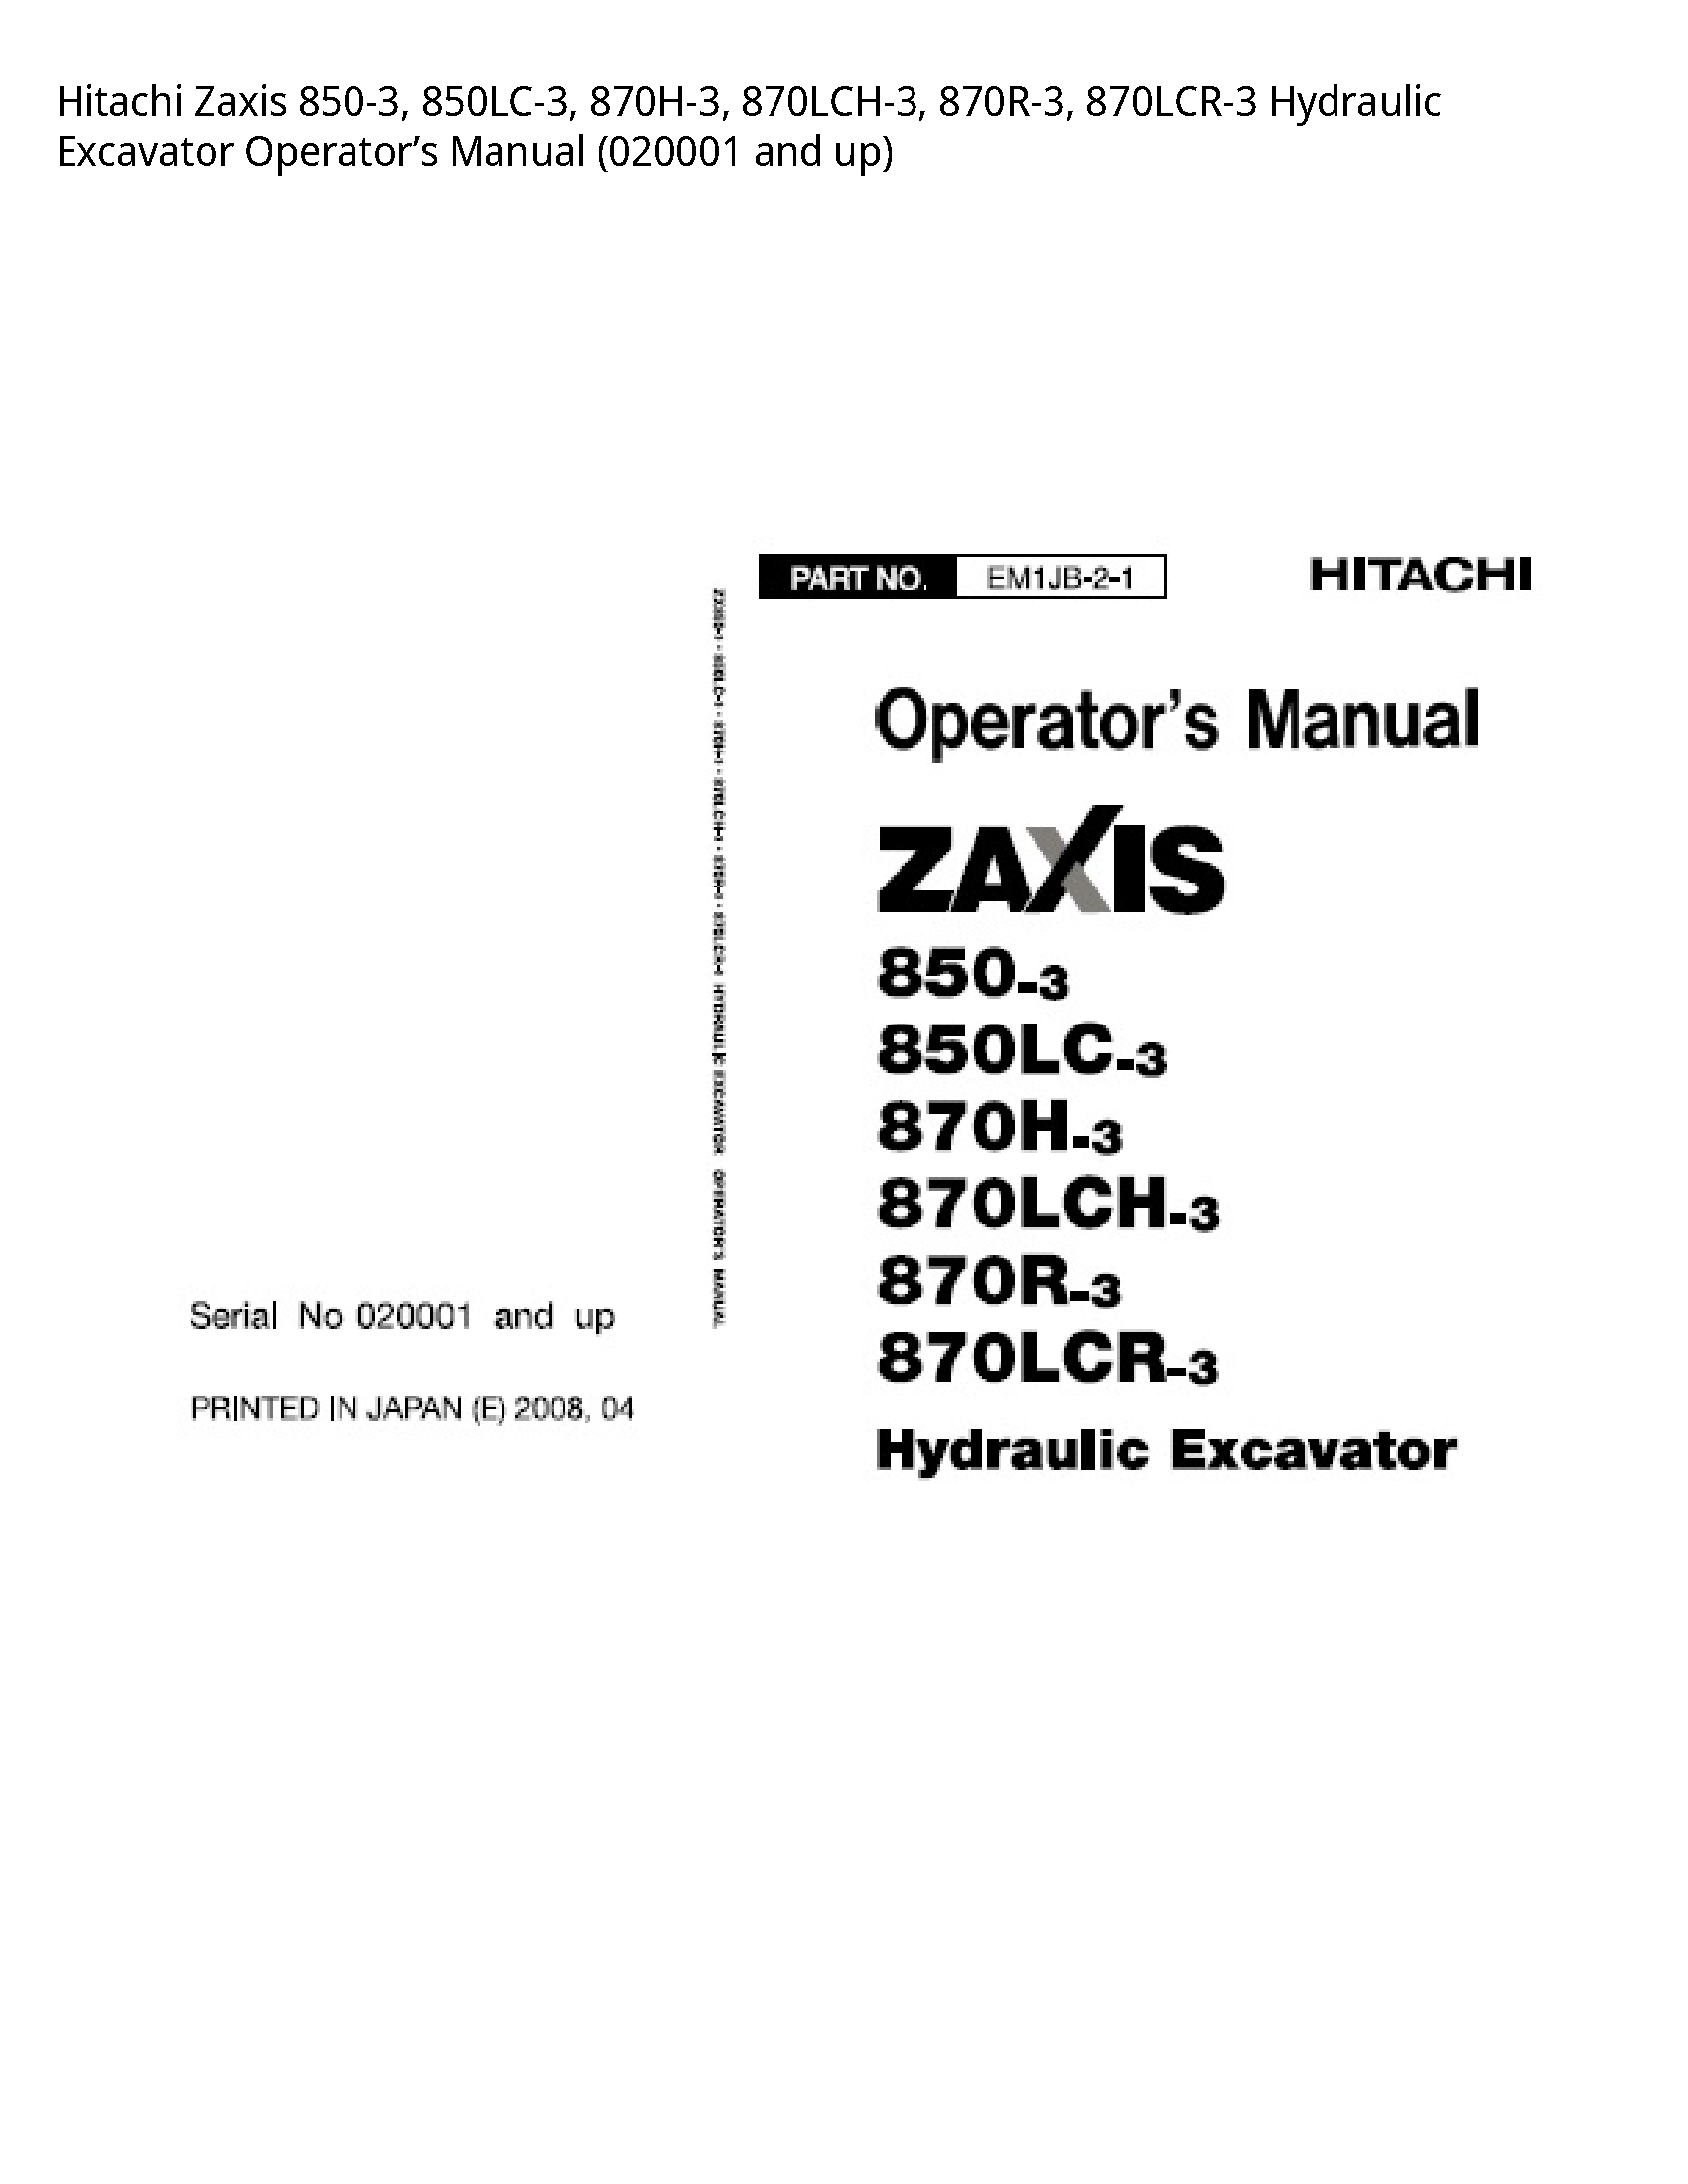 Hitachi 850-3 Zaxis Hydraulic Excavator Operator’s manual